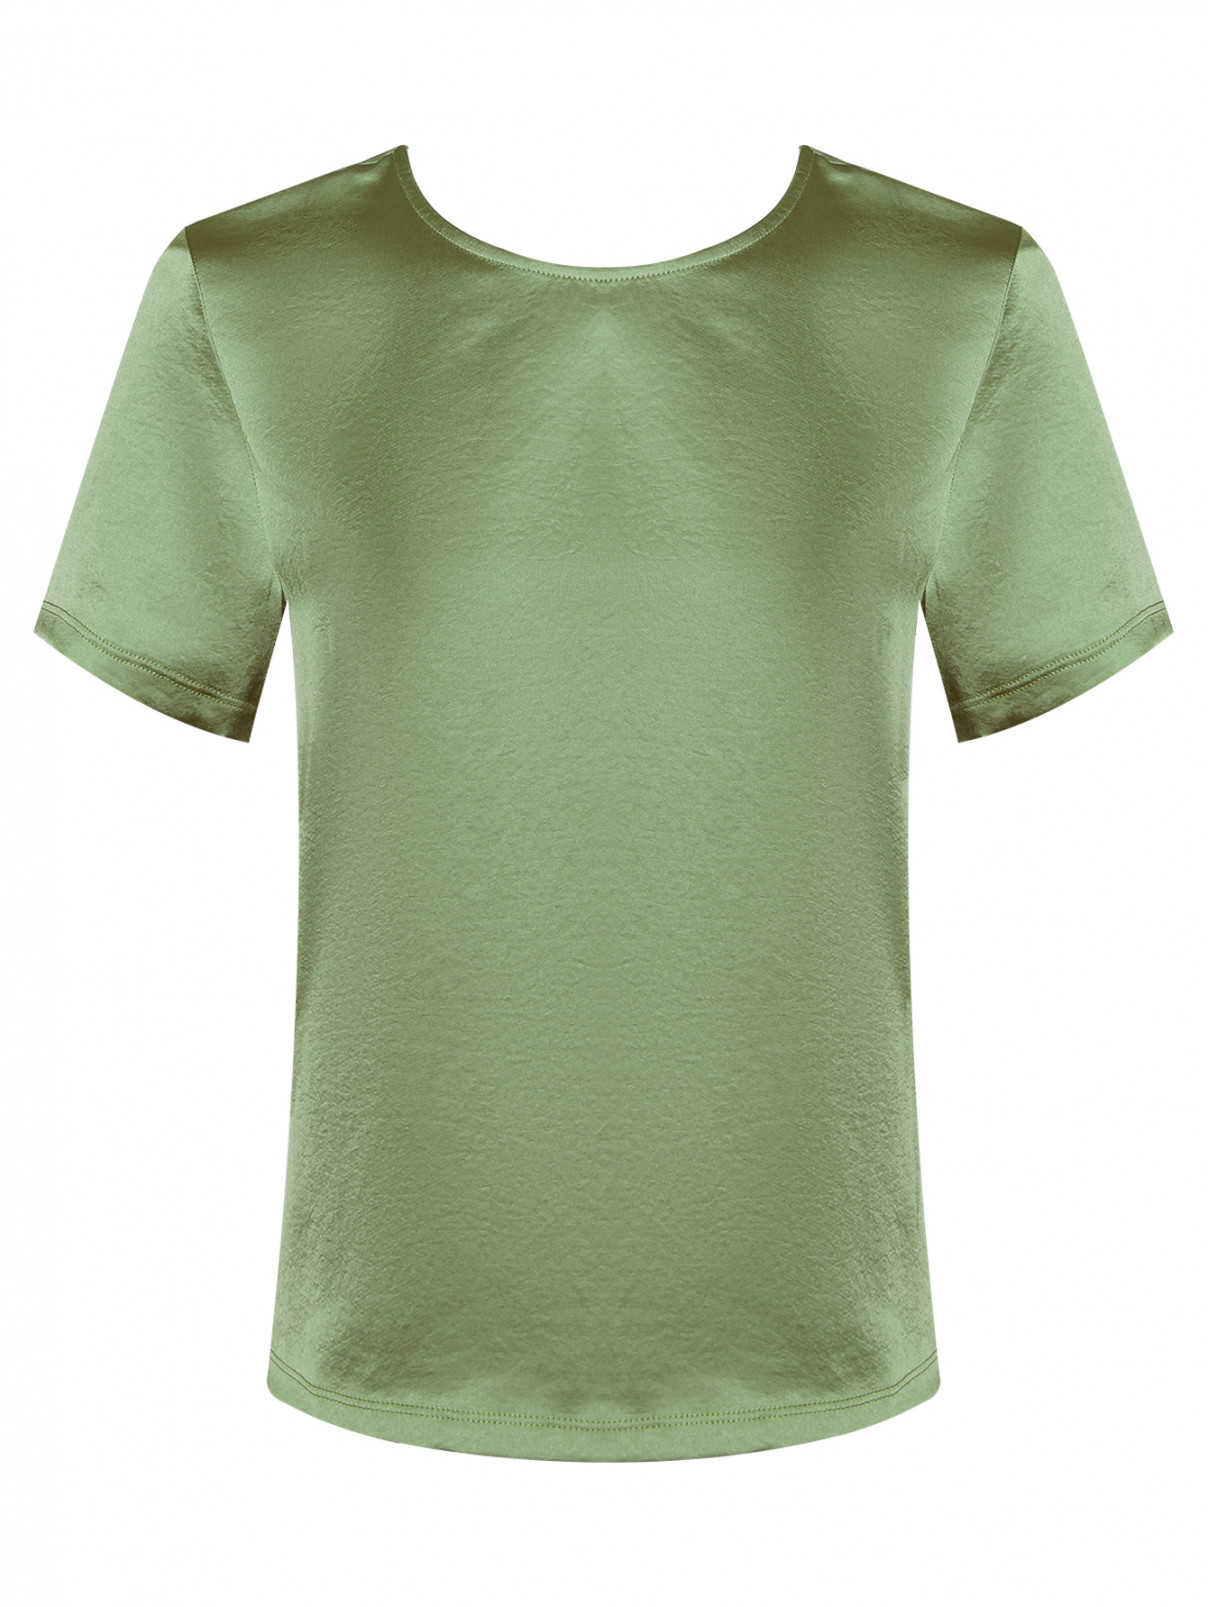 Блуза с короткими рукавами Weekend Max Mara  –  Общий вид  – Цвет:  Зеленый